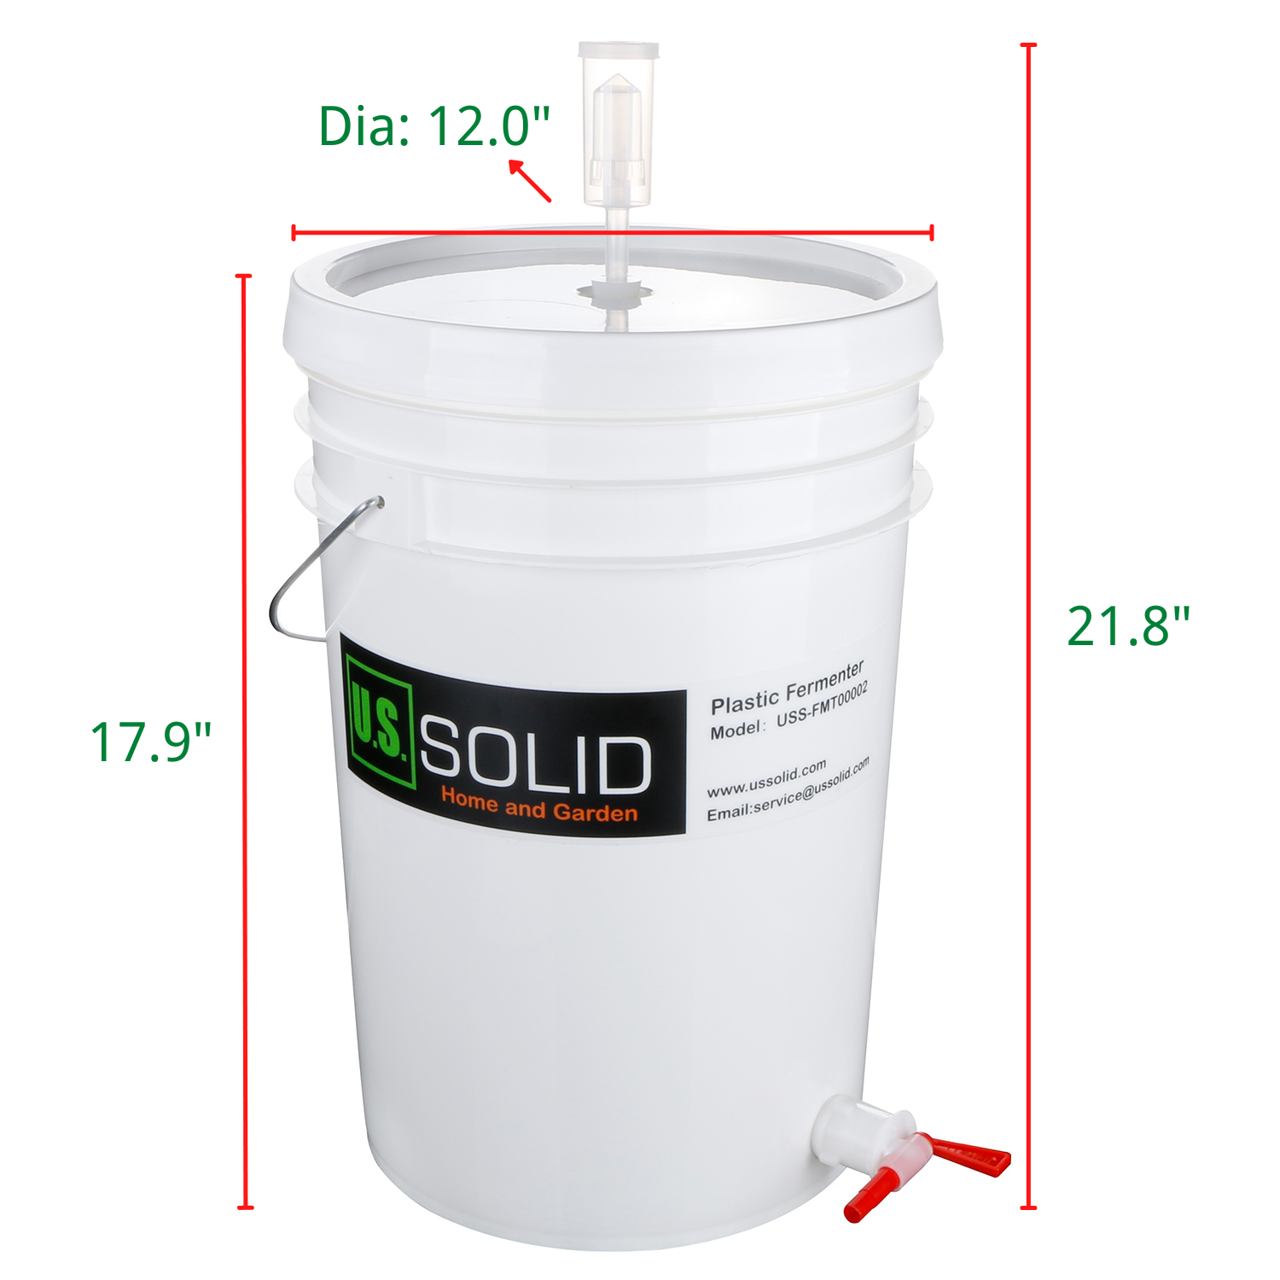 6 Gallon Bucket Fermenter » Southwest Grape & Grain